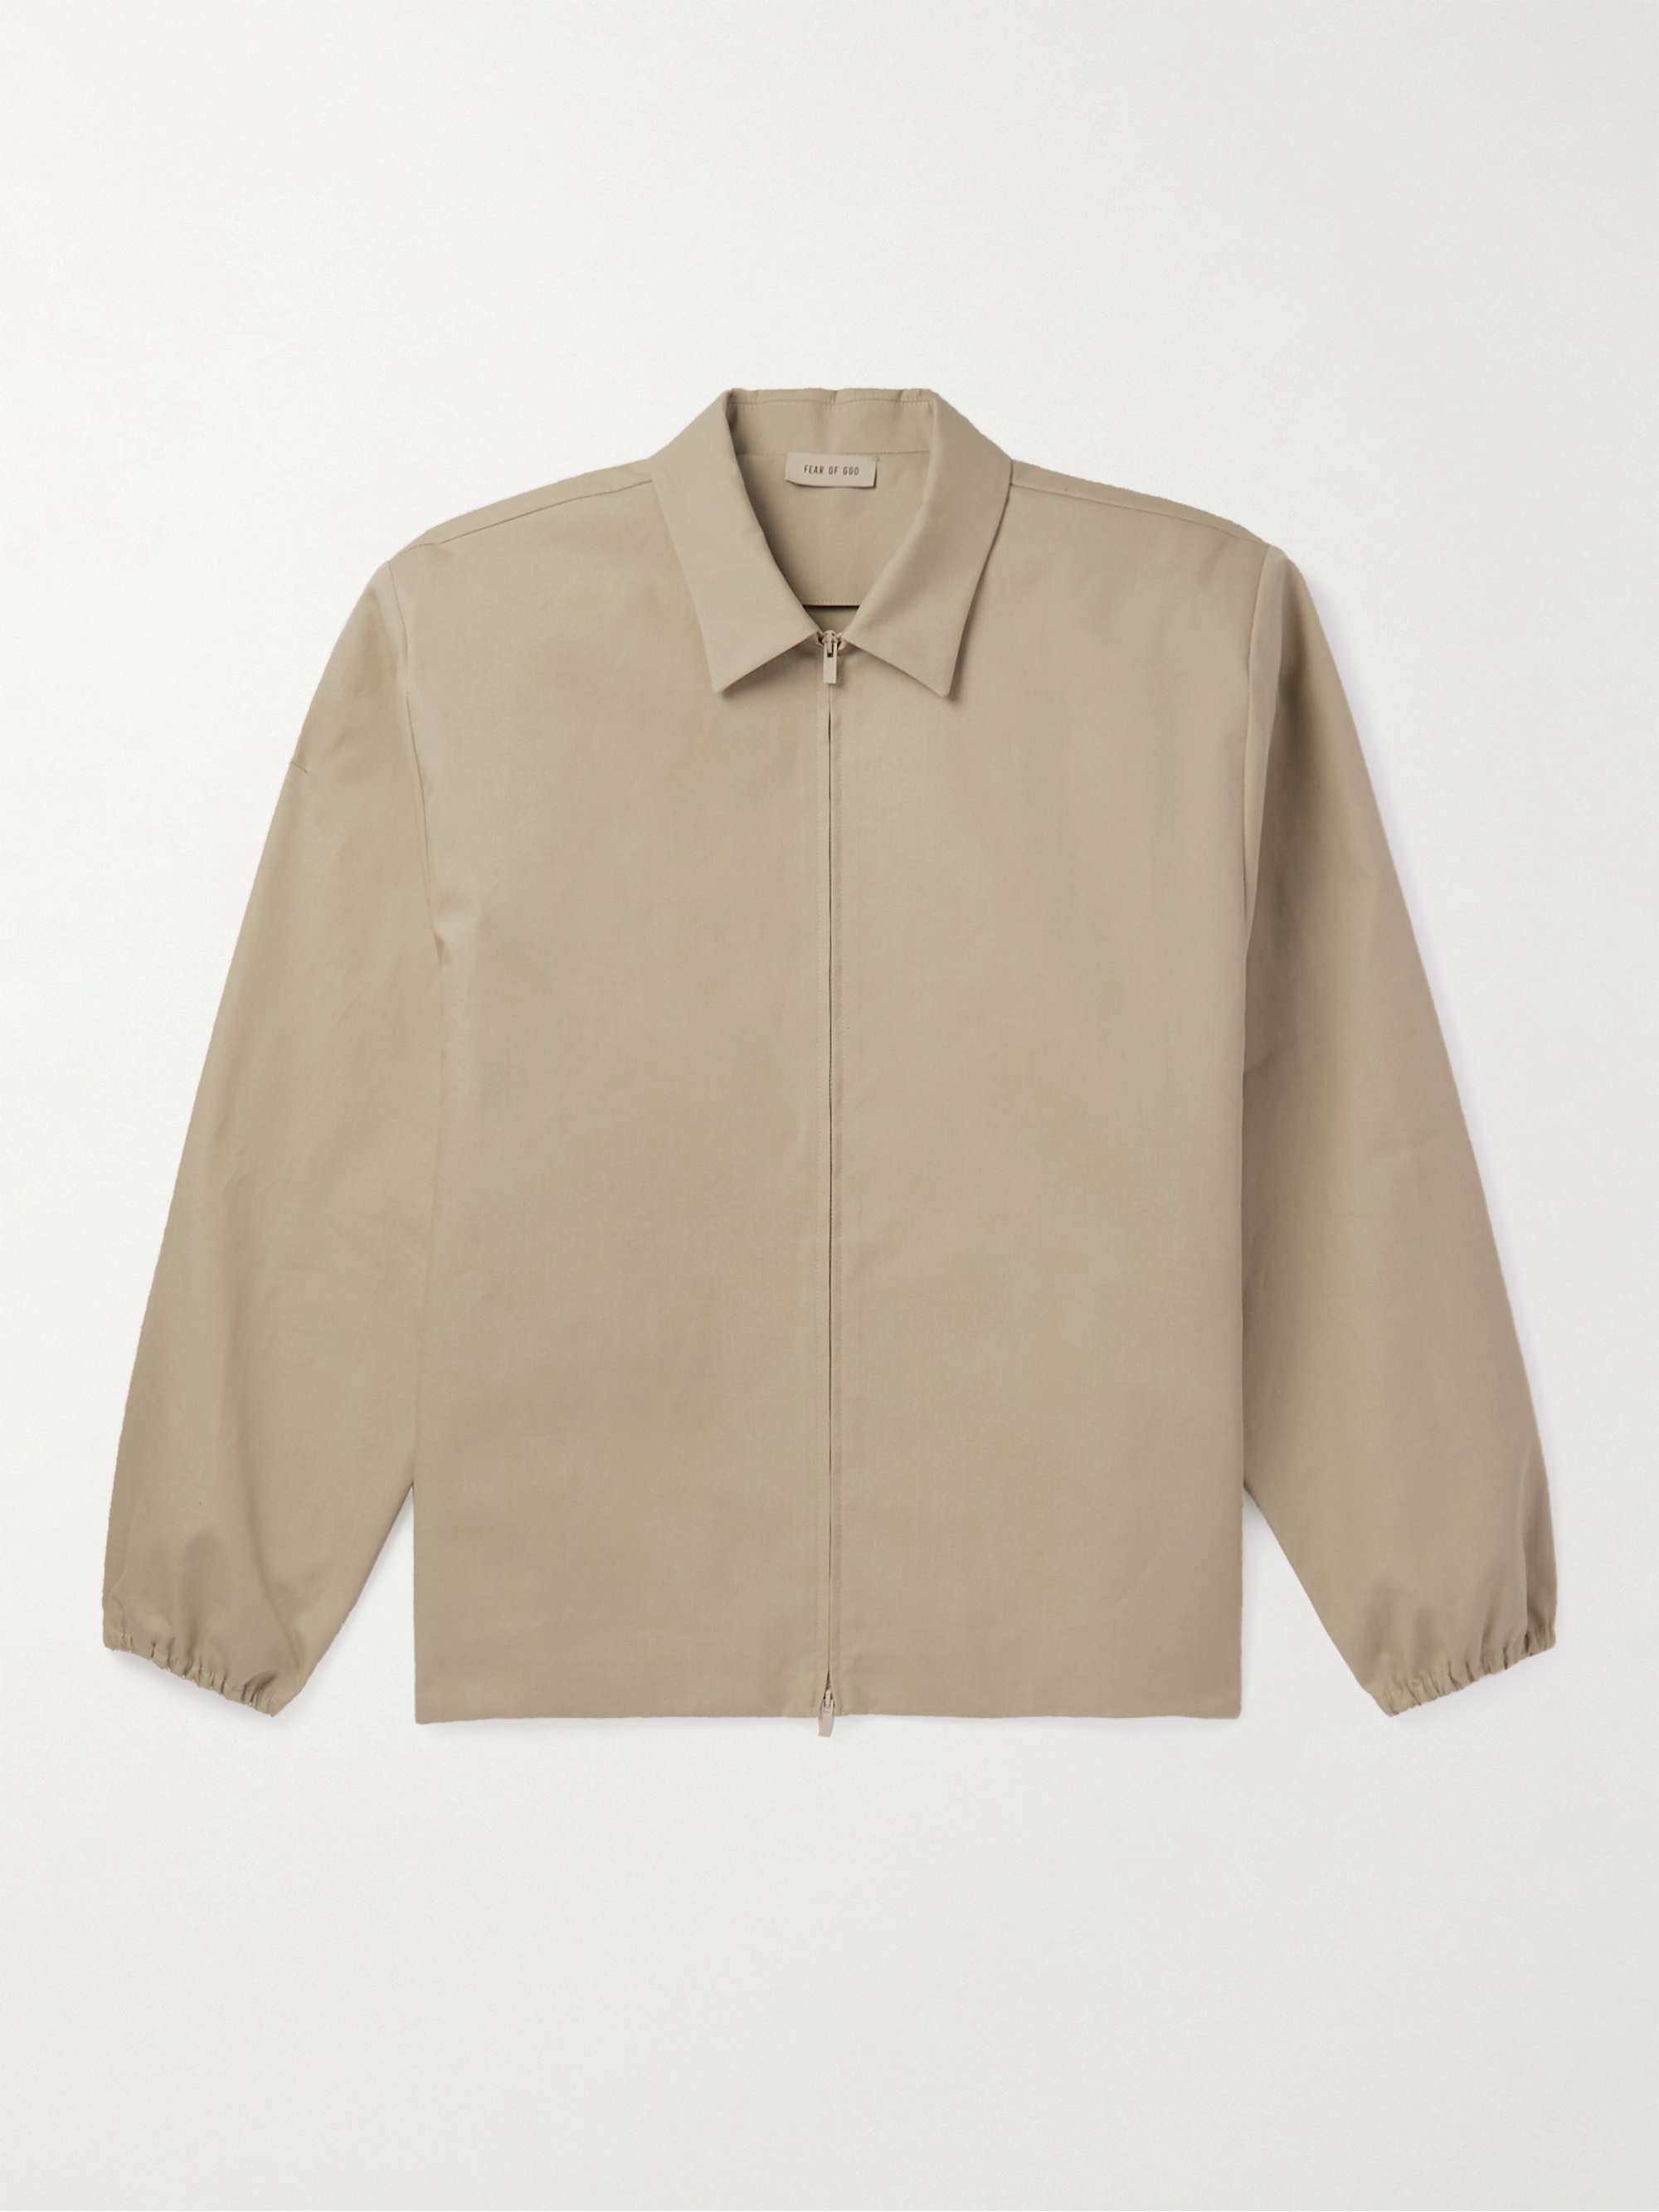 FEAR OF GOD ESSENTIALS Cotton-Corduroy Zip-Up Shirt Jacket for Men